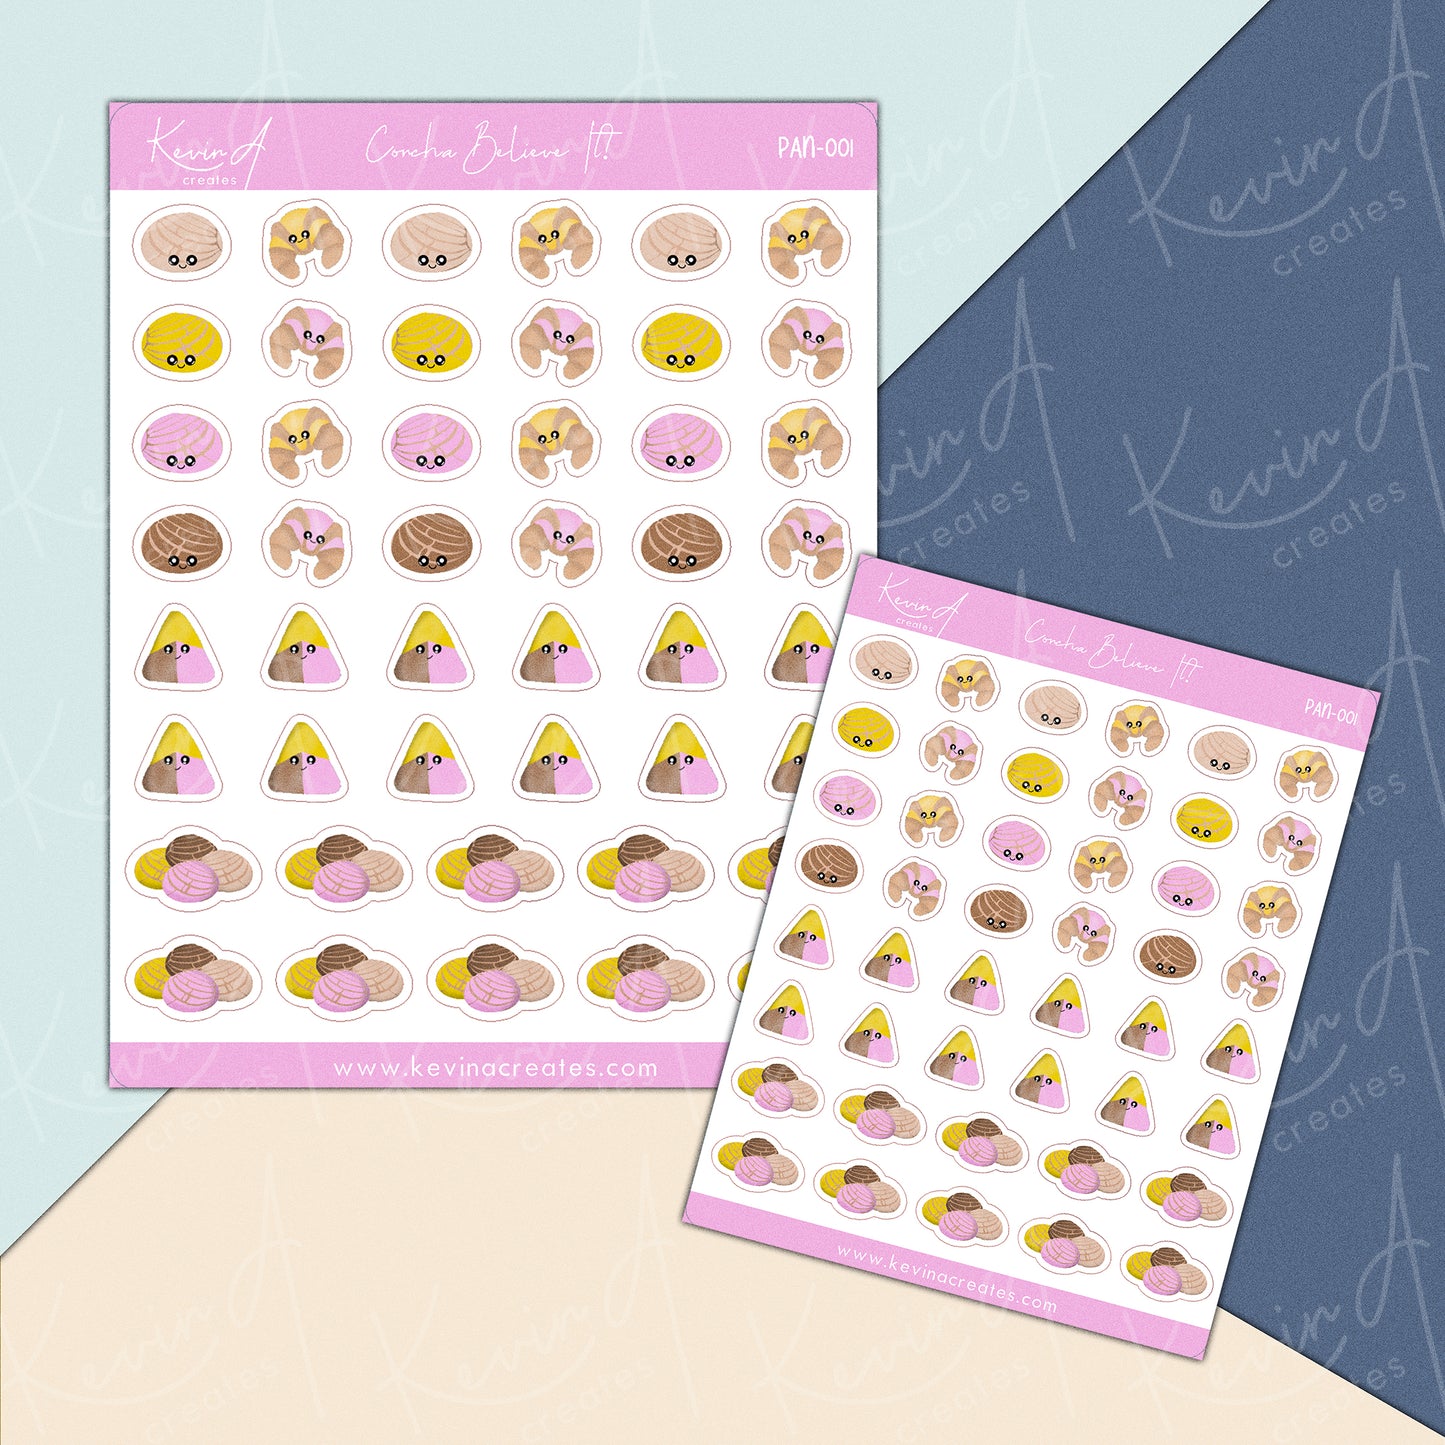 PAN-001, Cute Pan Dulce Kawaii Doodles Planner Stickers